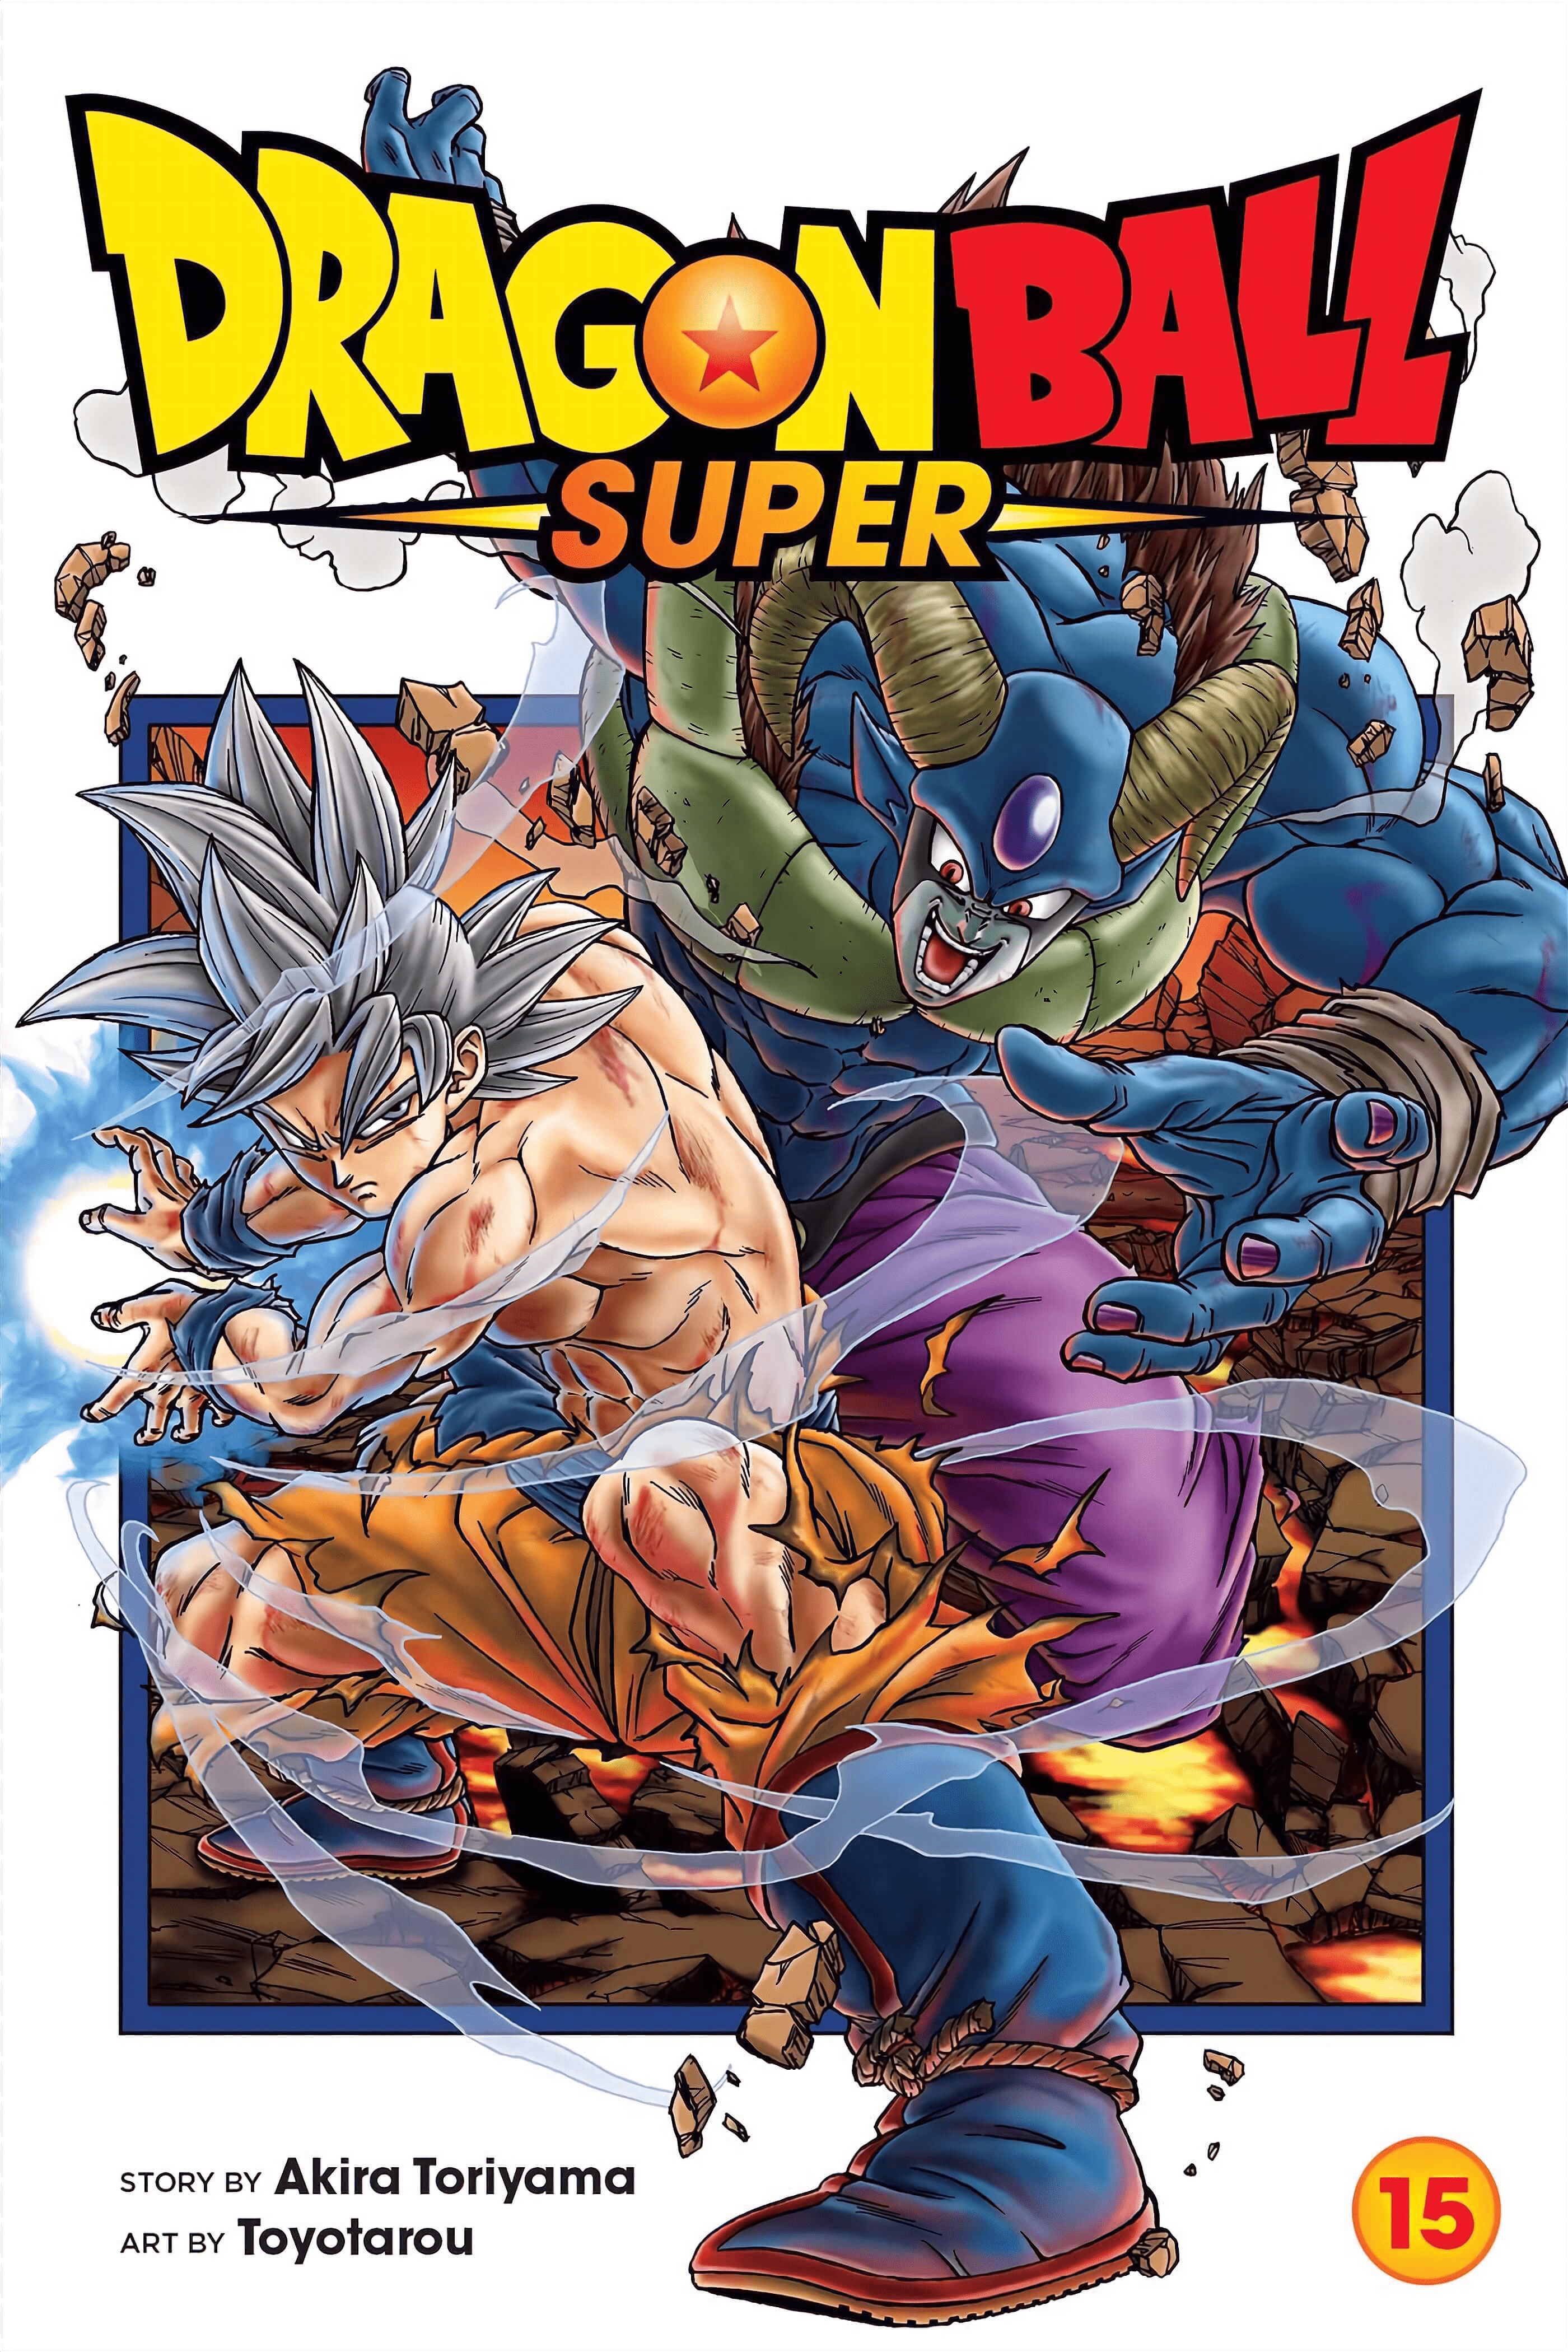 Dragon Ball Super 2: Goku vs GODS - The New Tournament of Power Begins!?  